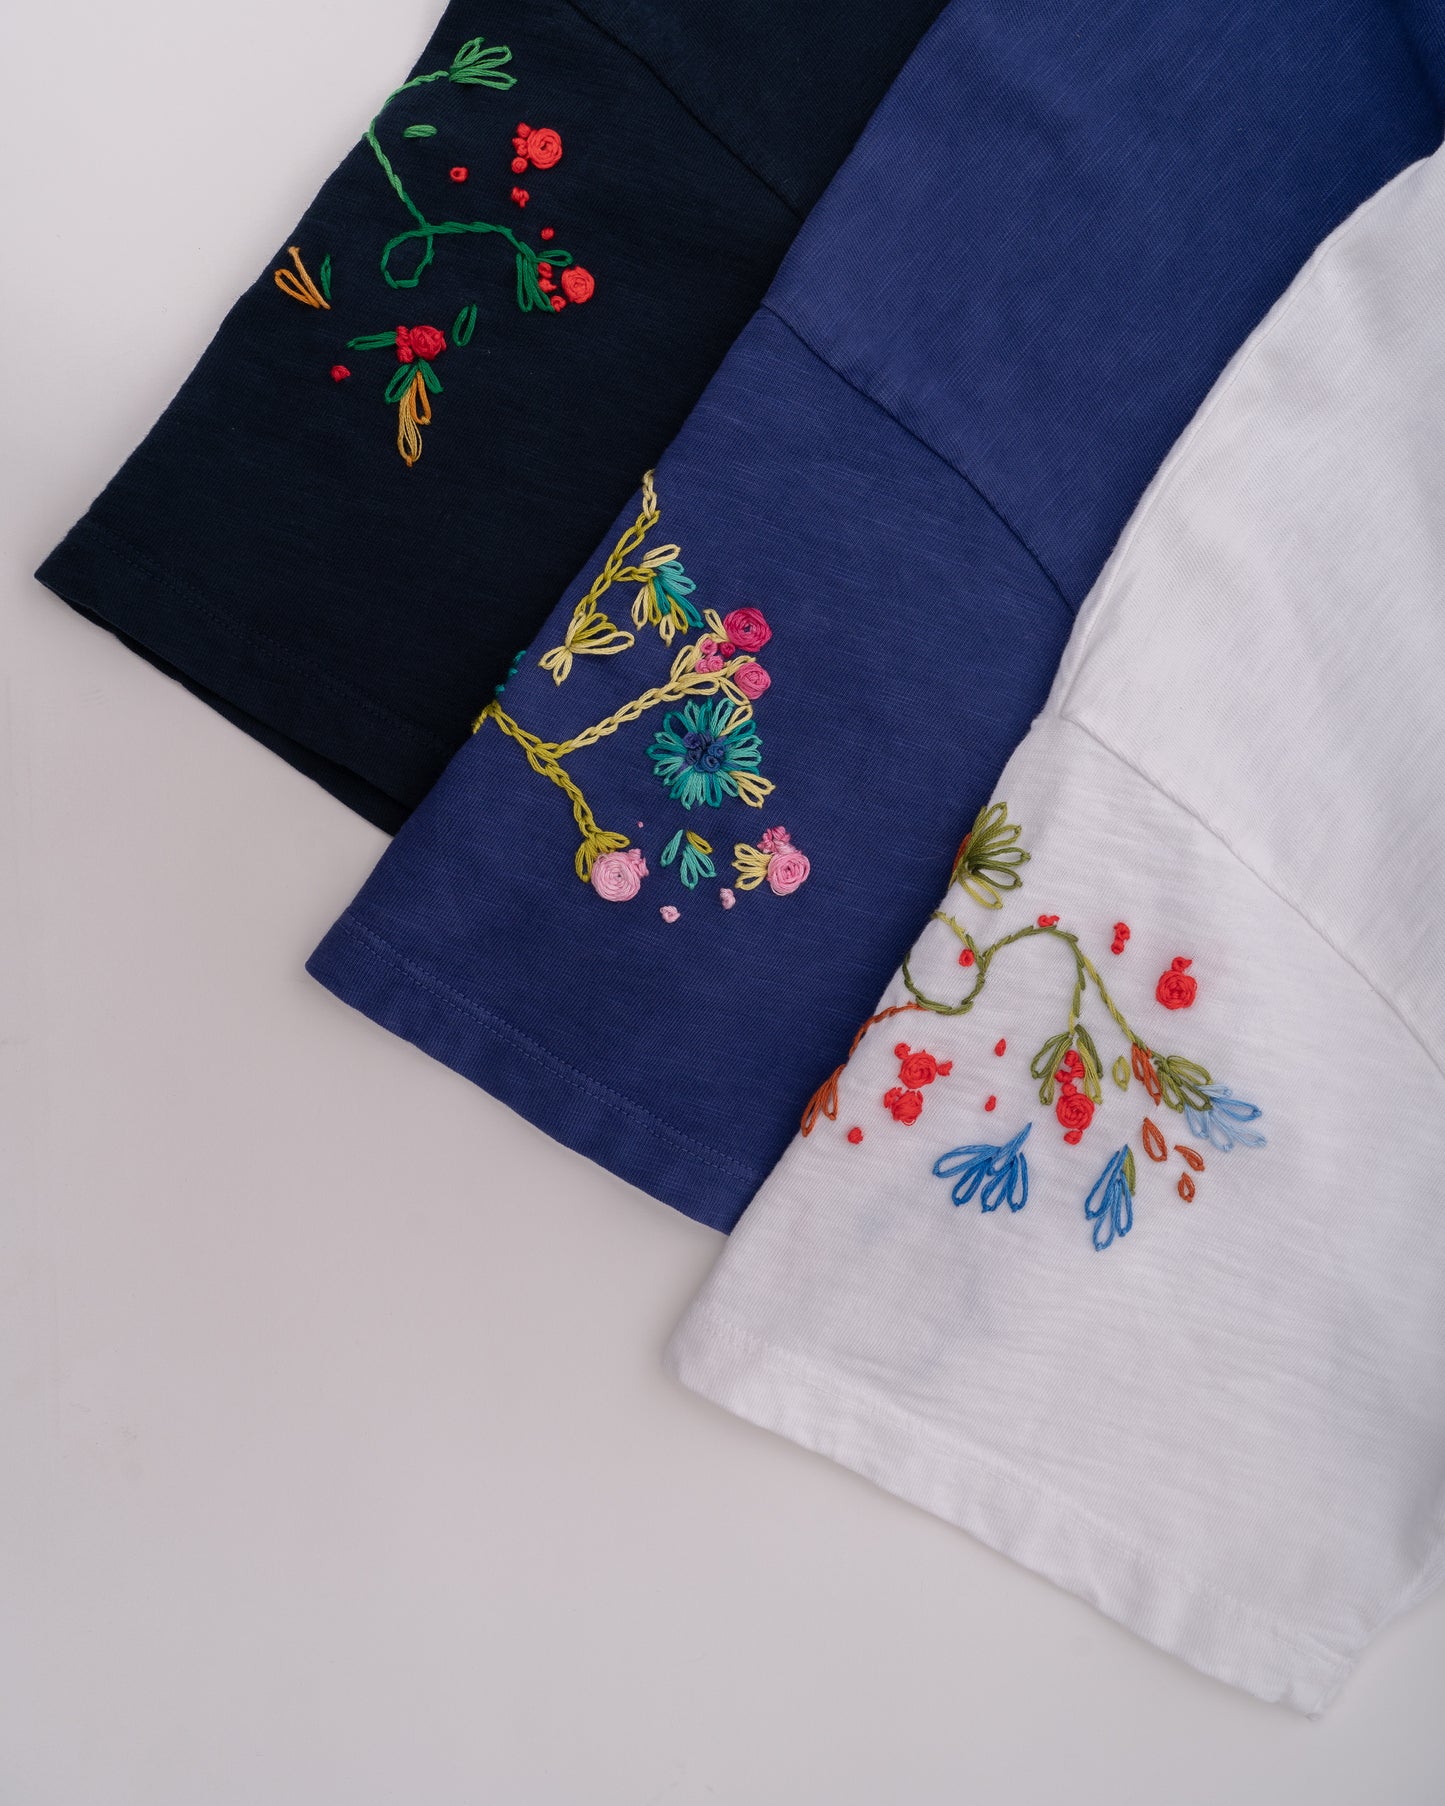 Journey Tee - Bluing Floral Sleeve